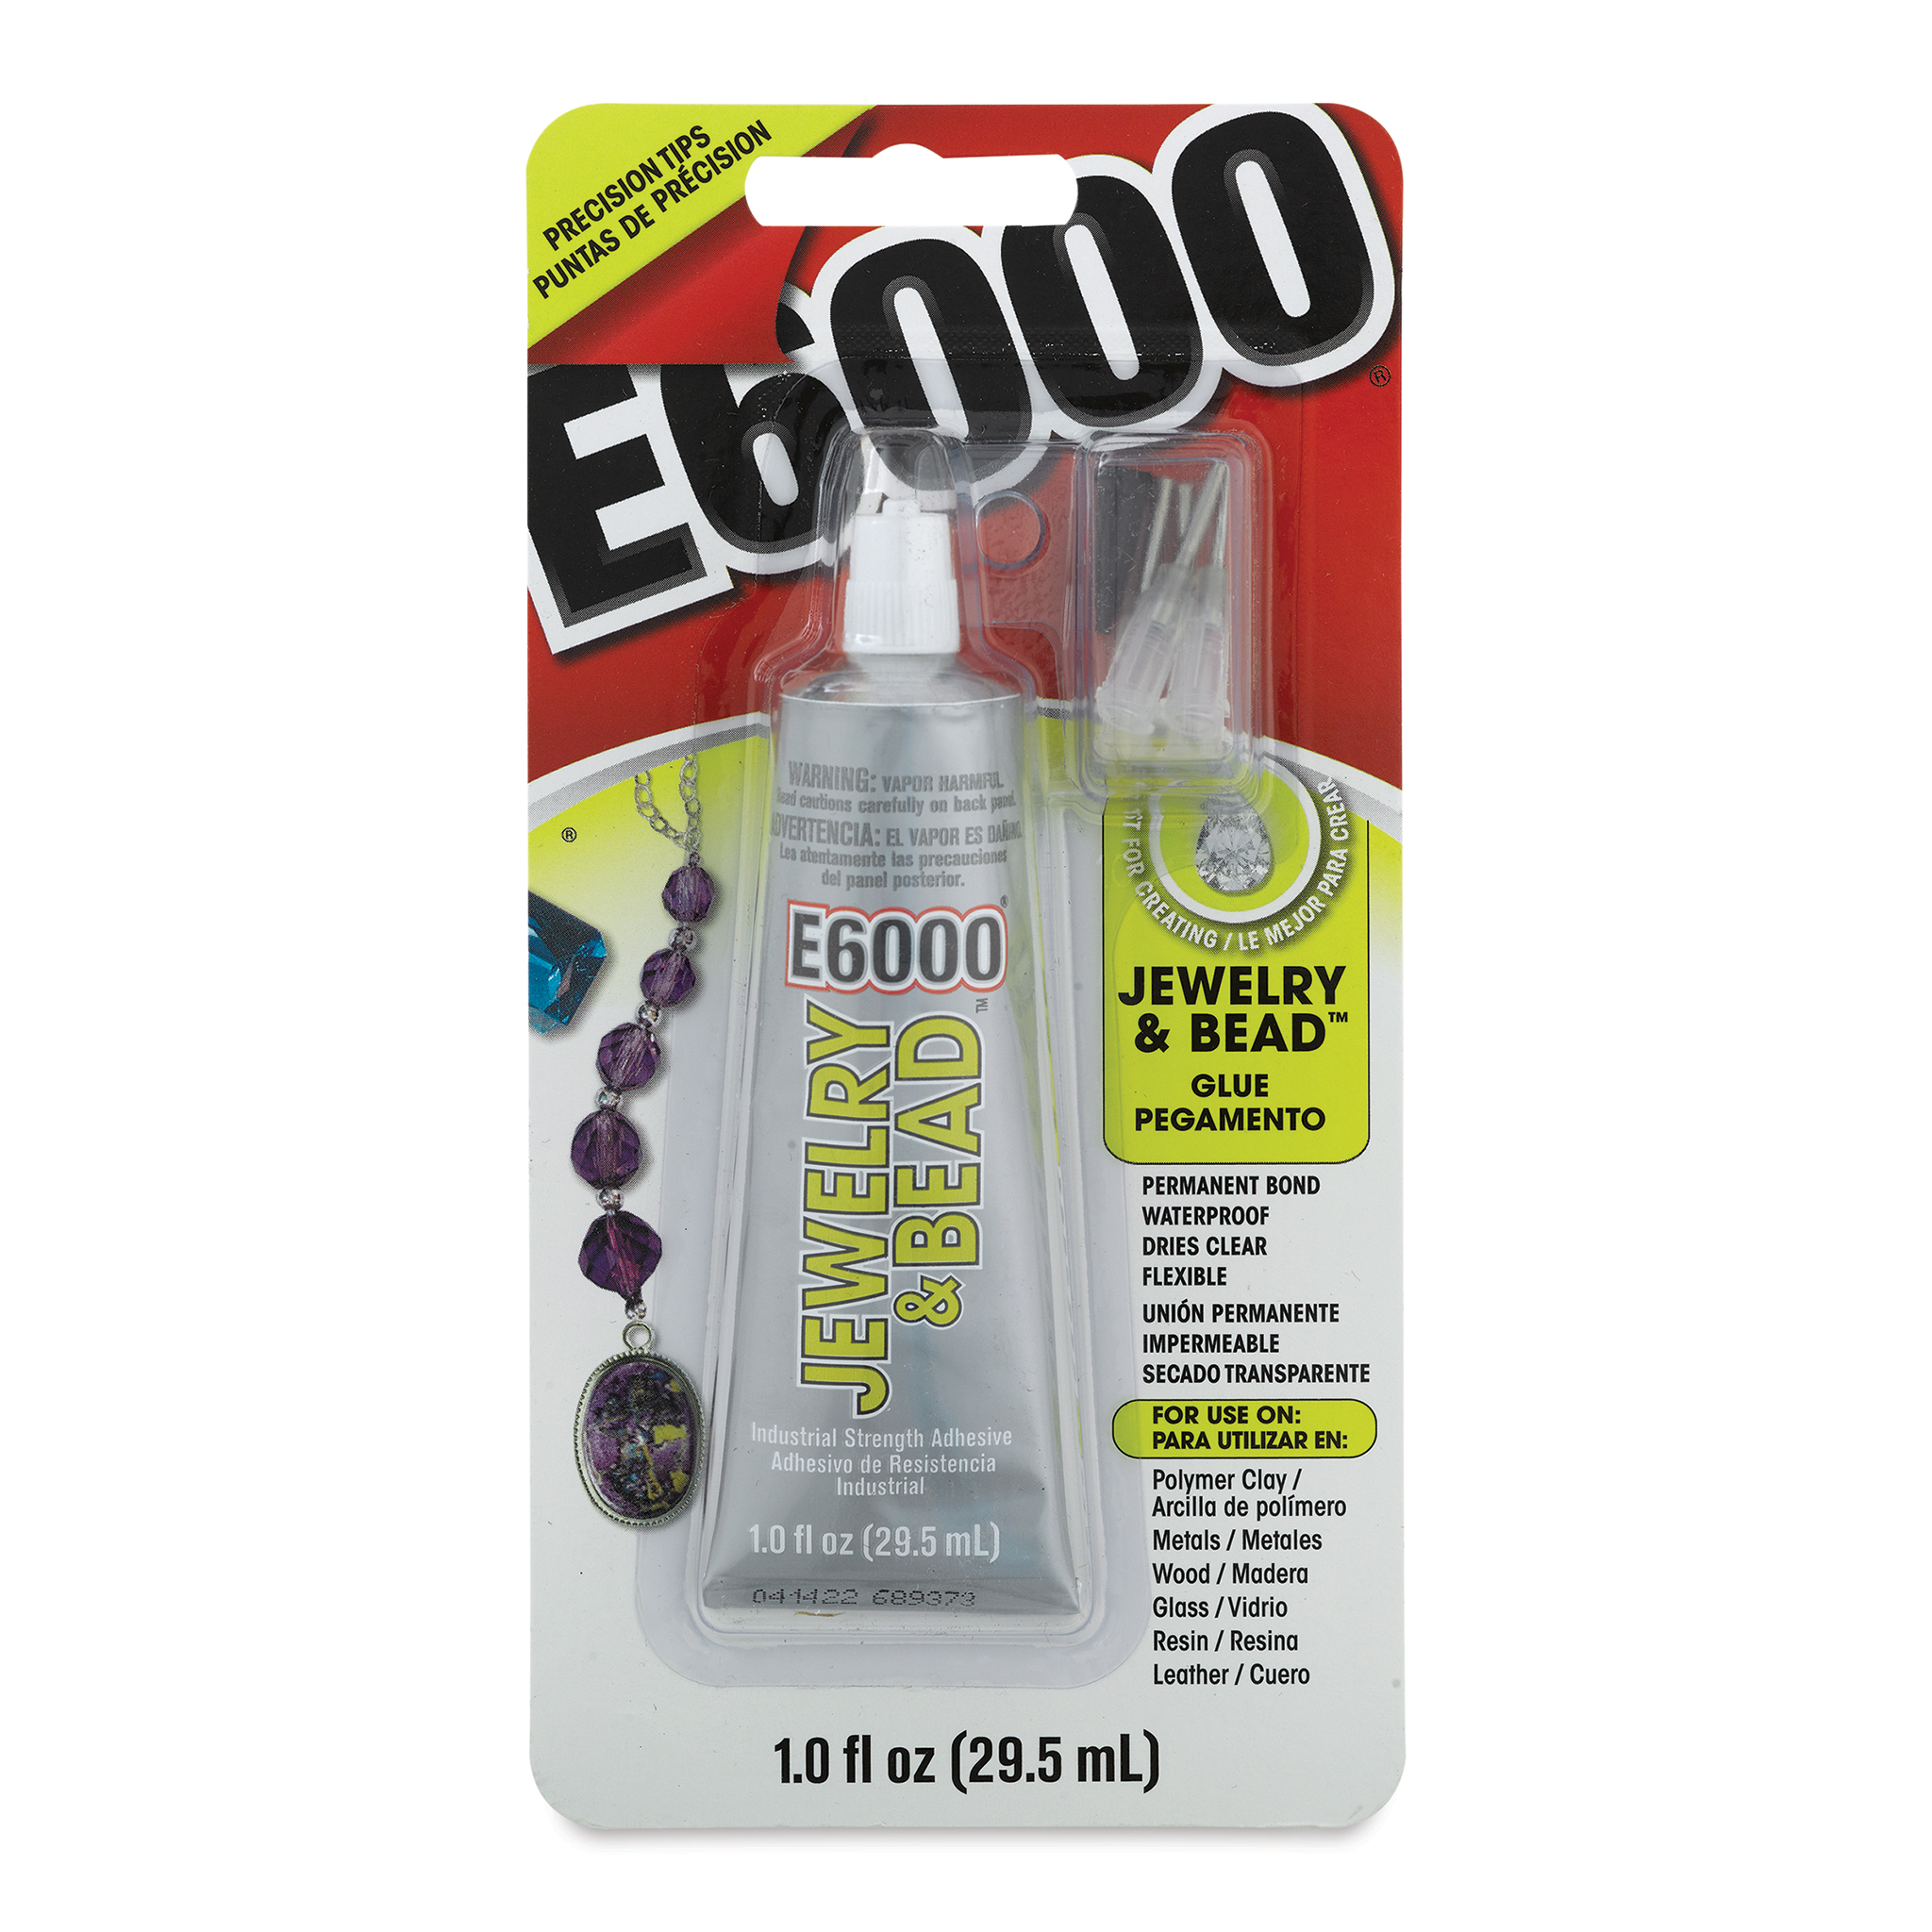 E6000 Industrial Strength Adhesive - Mini Tubes, Pkg of 4, BLICK Art  Materials